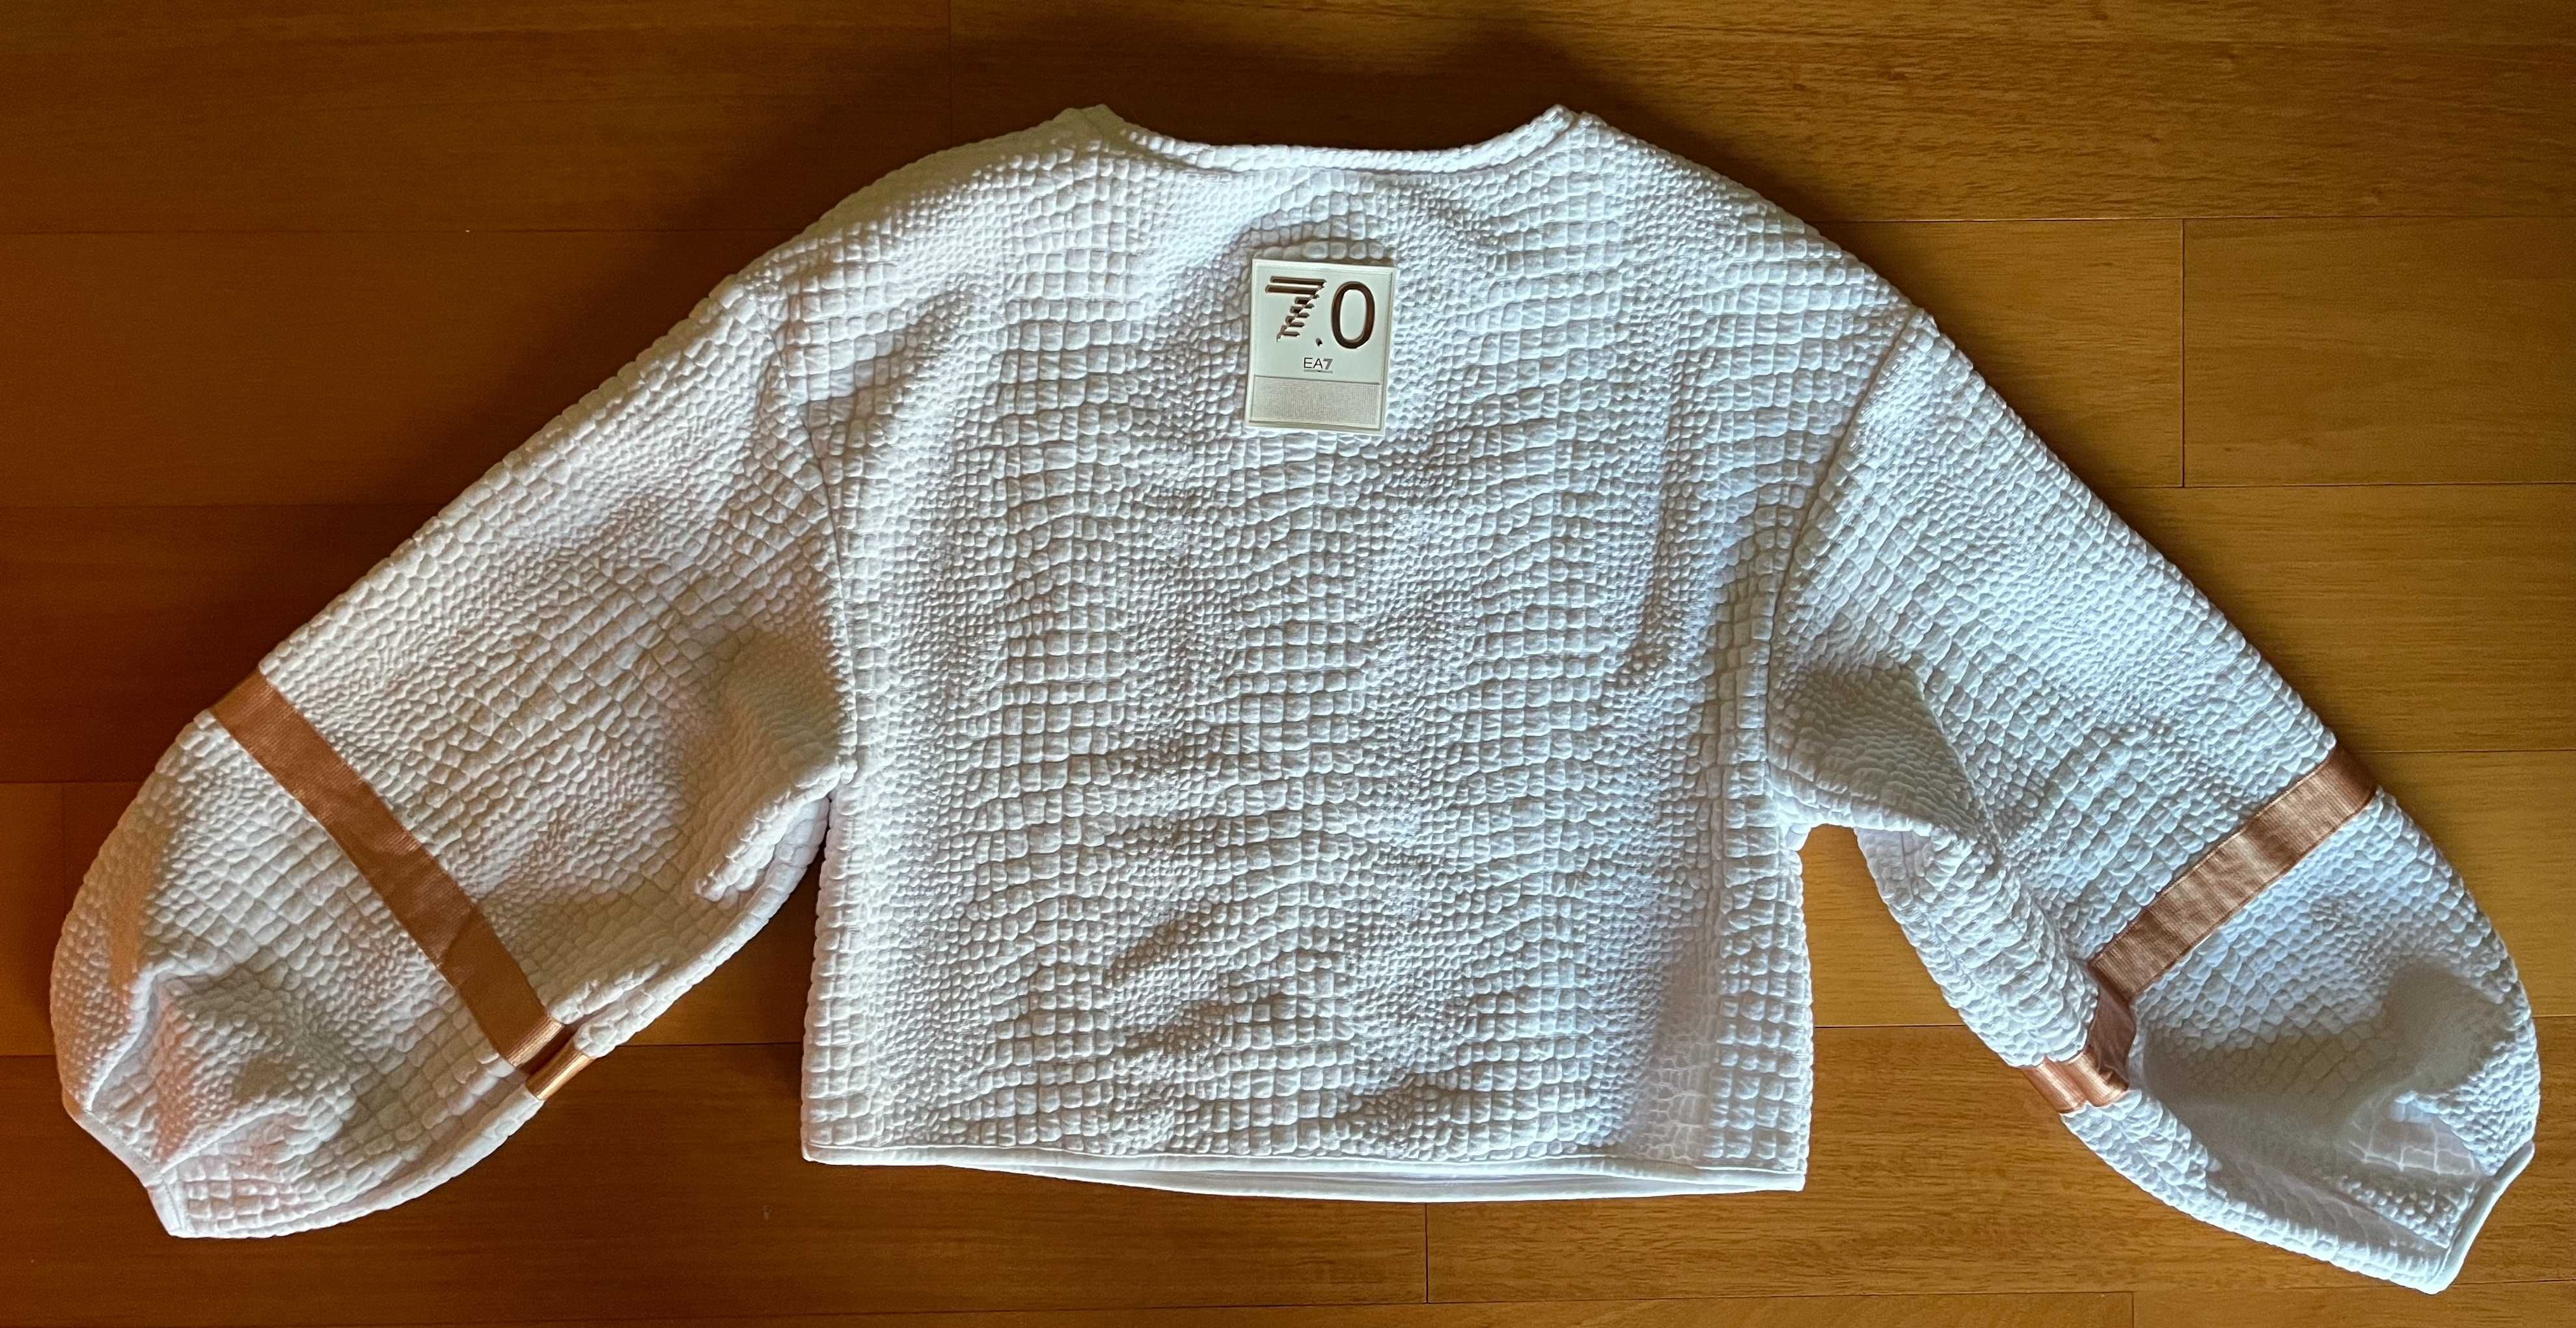 Sweatshirt de mulher - EA7 Emporio Armani - Tamanho XXS